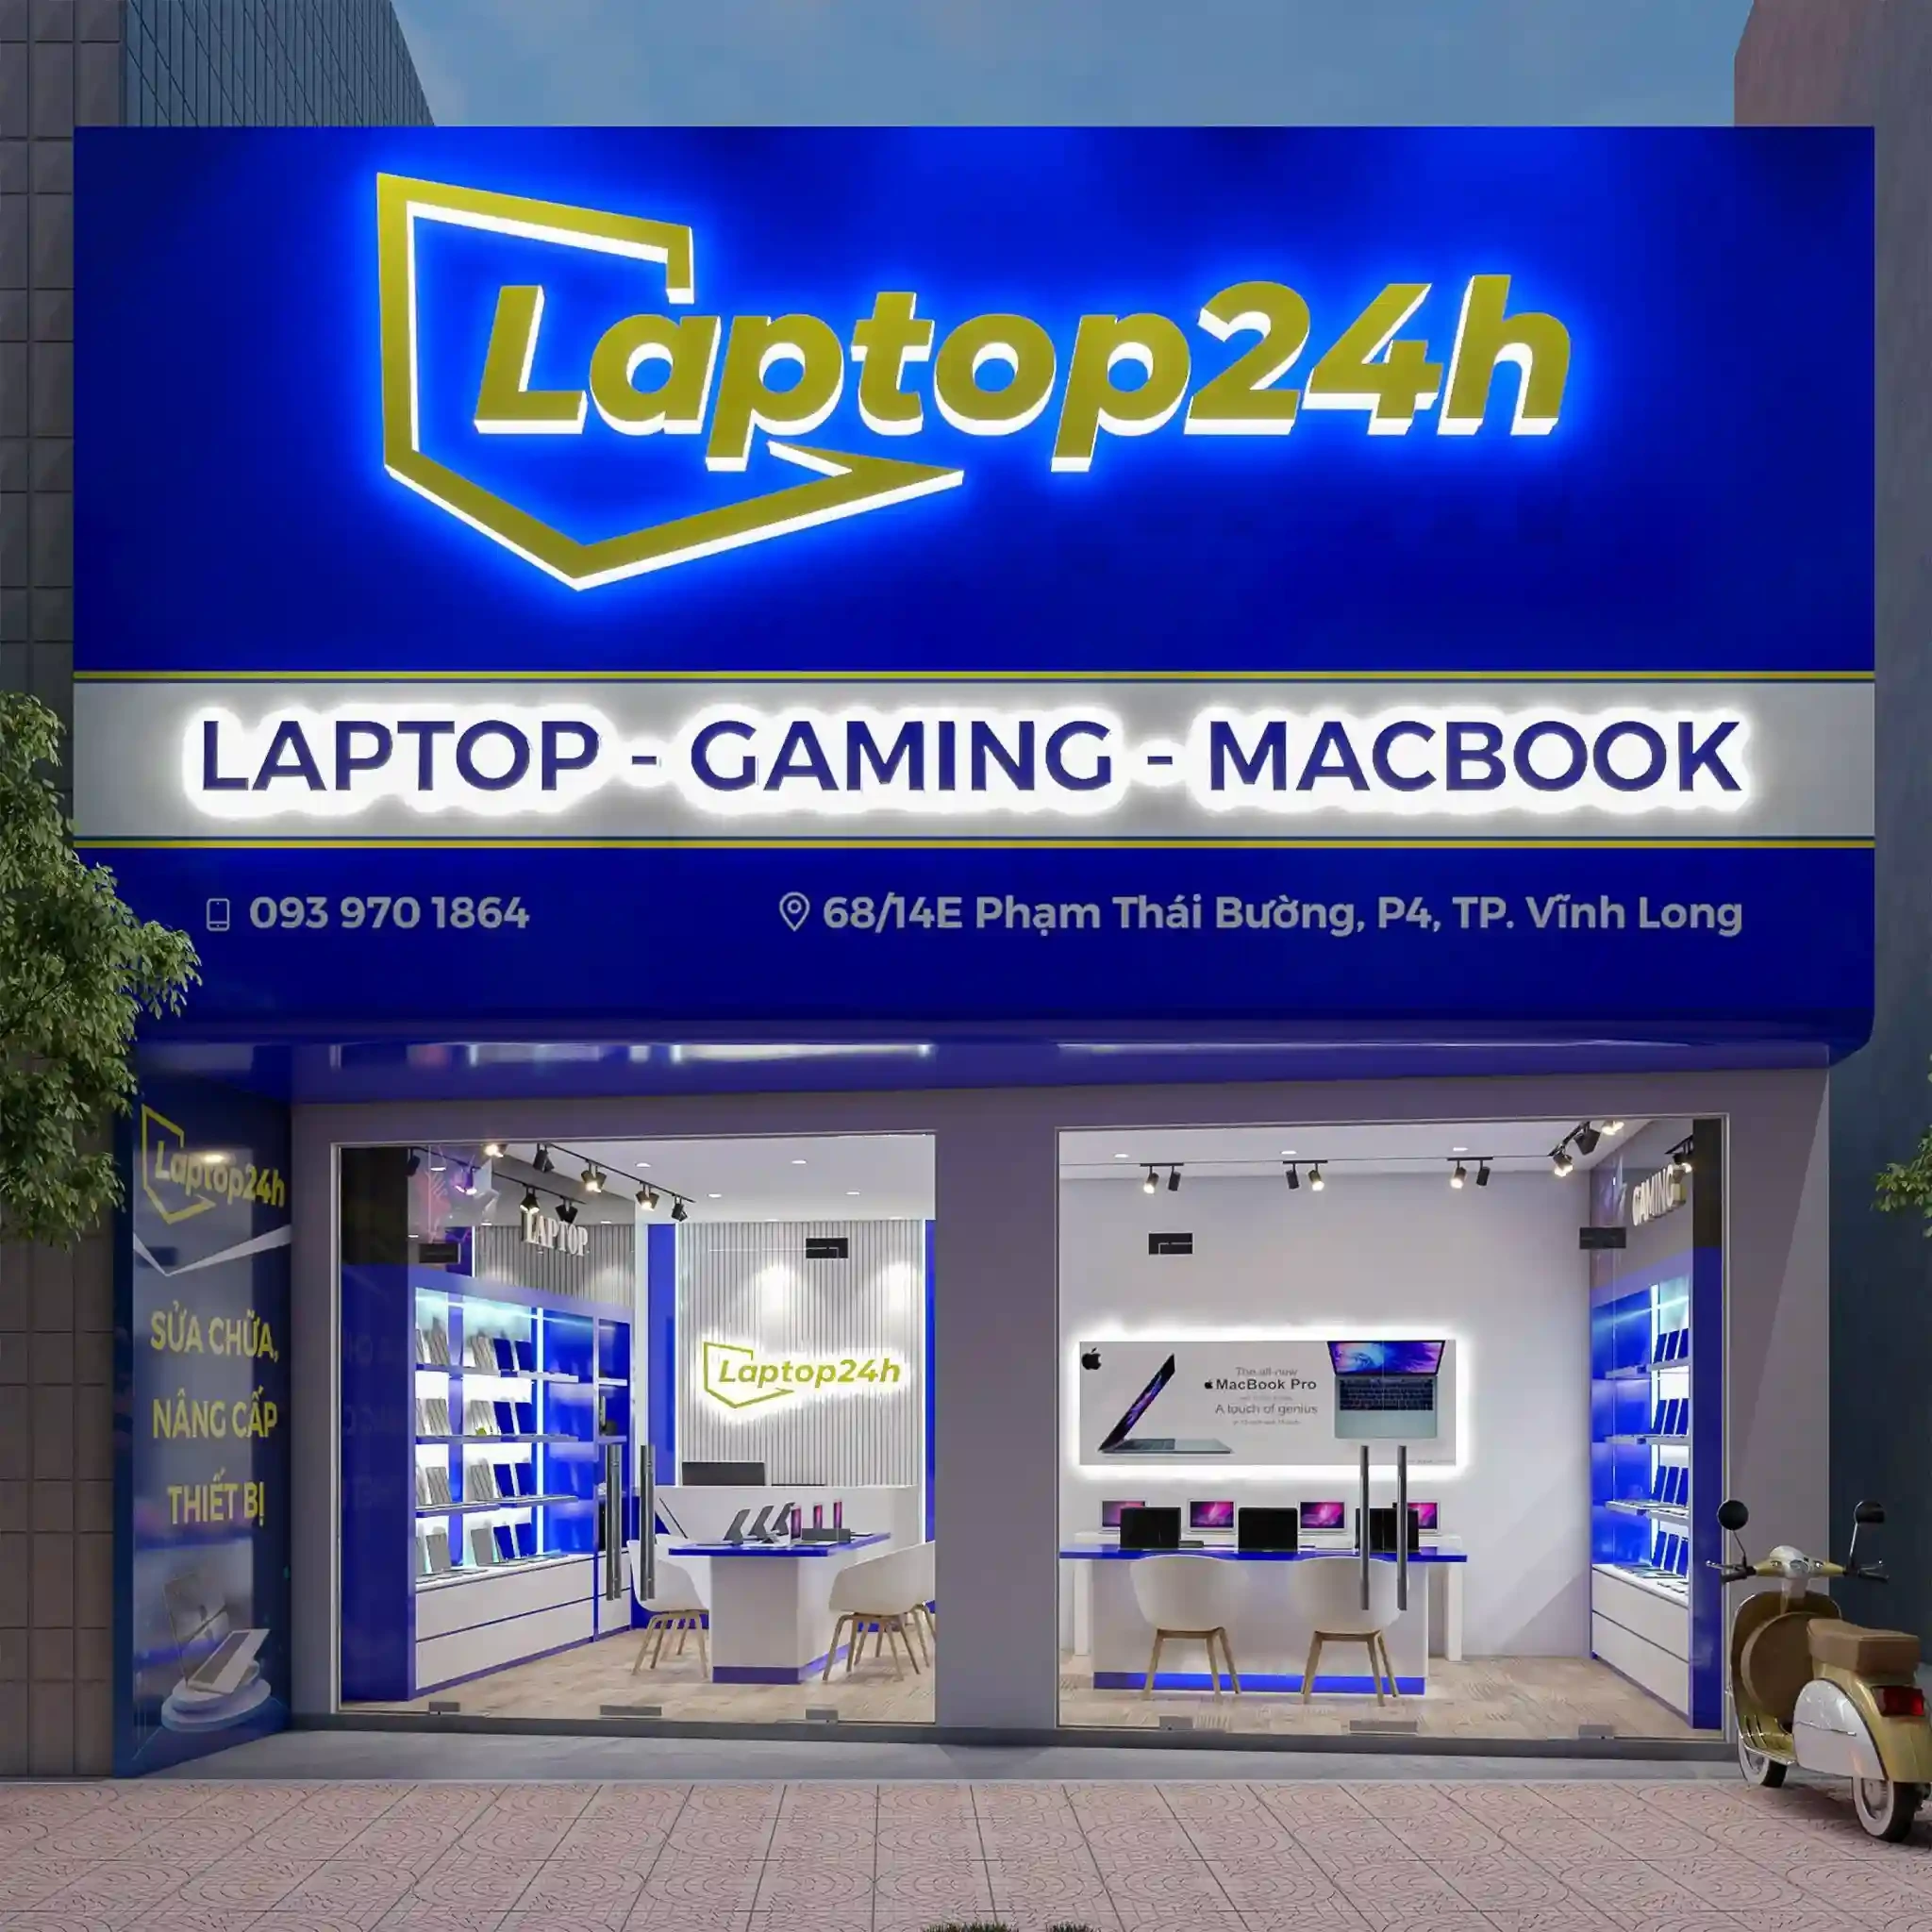 laptop24h-image-doi-tac.webp